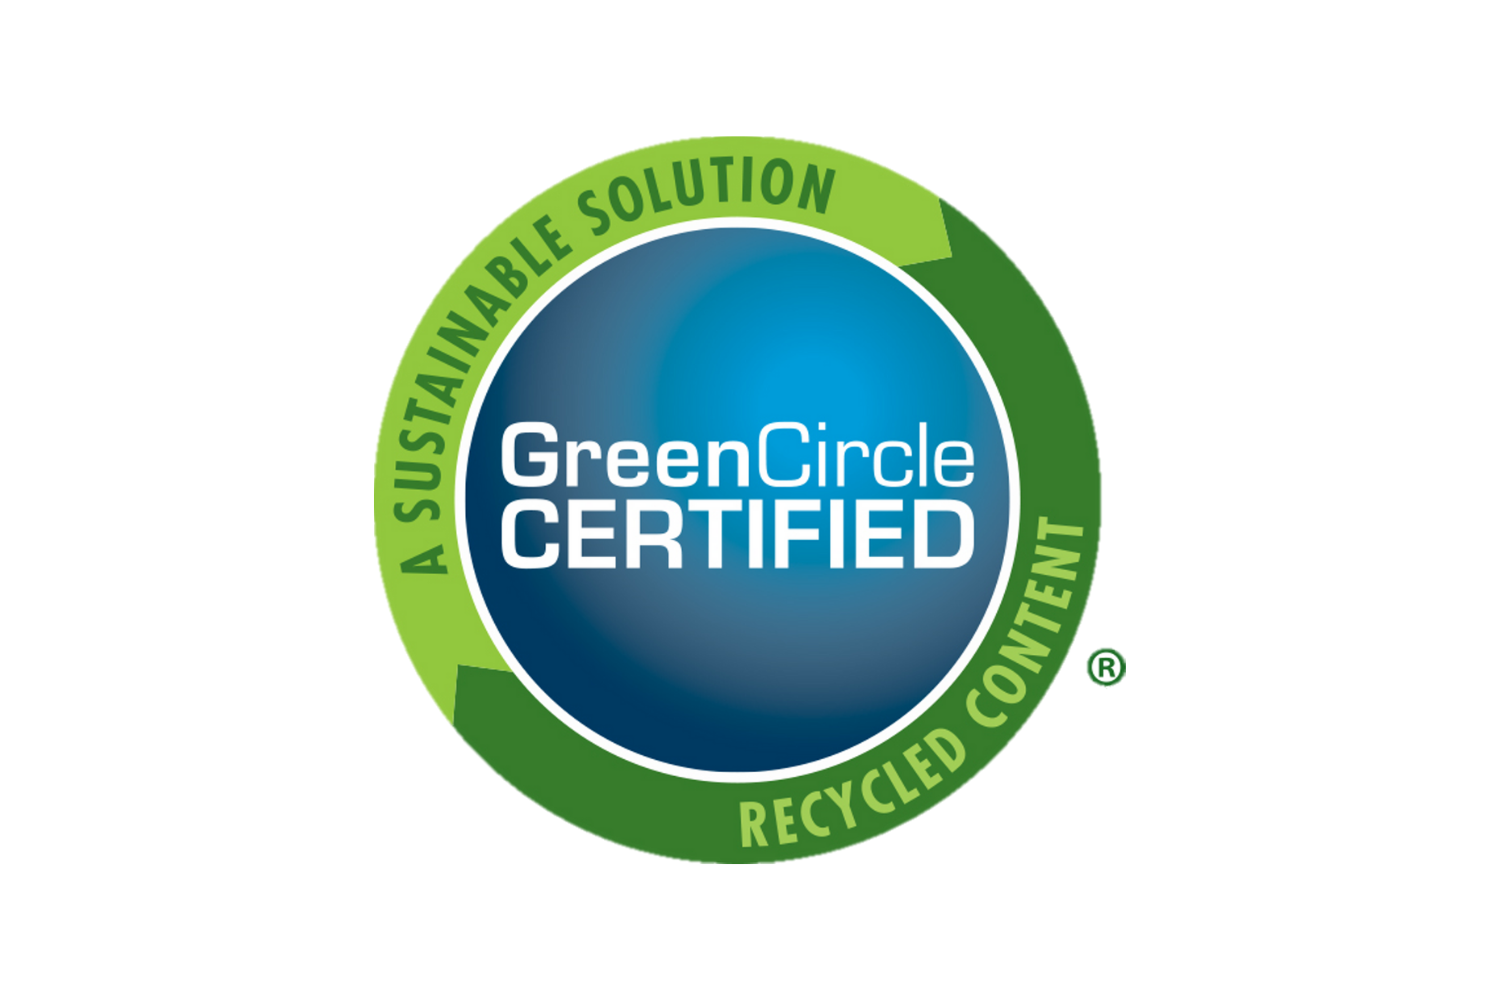 GreenCircle Certified